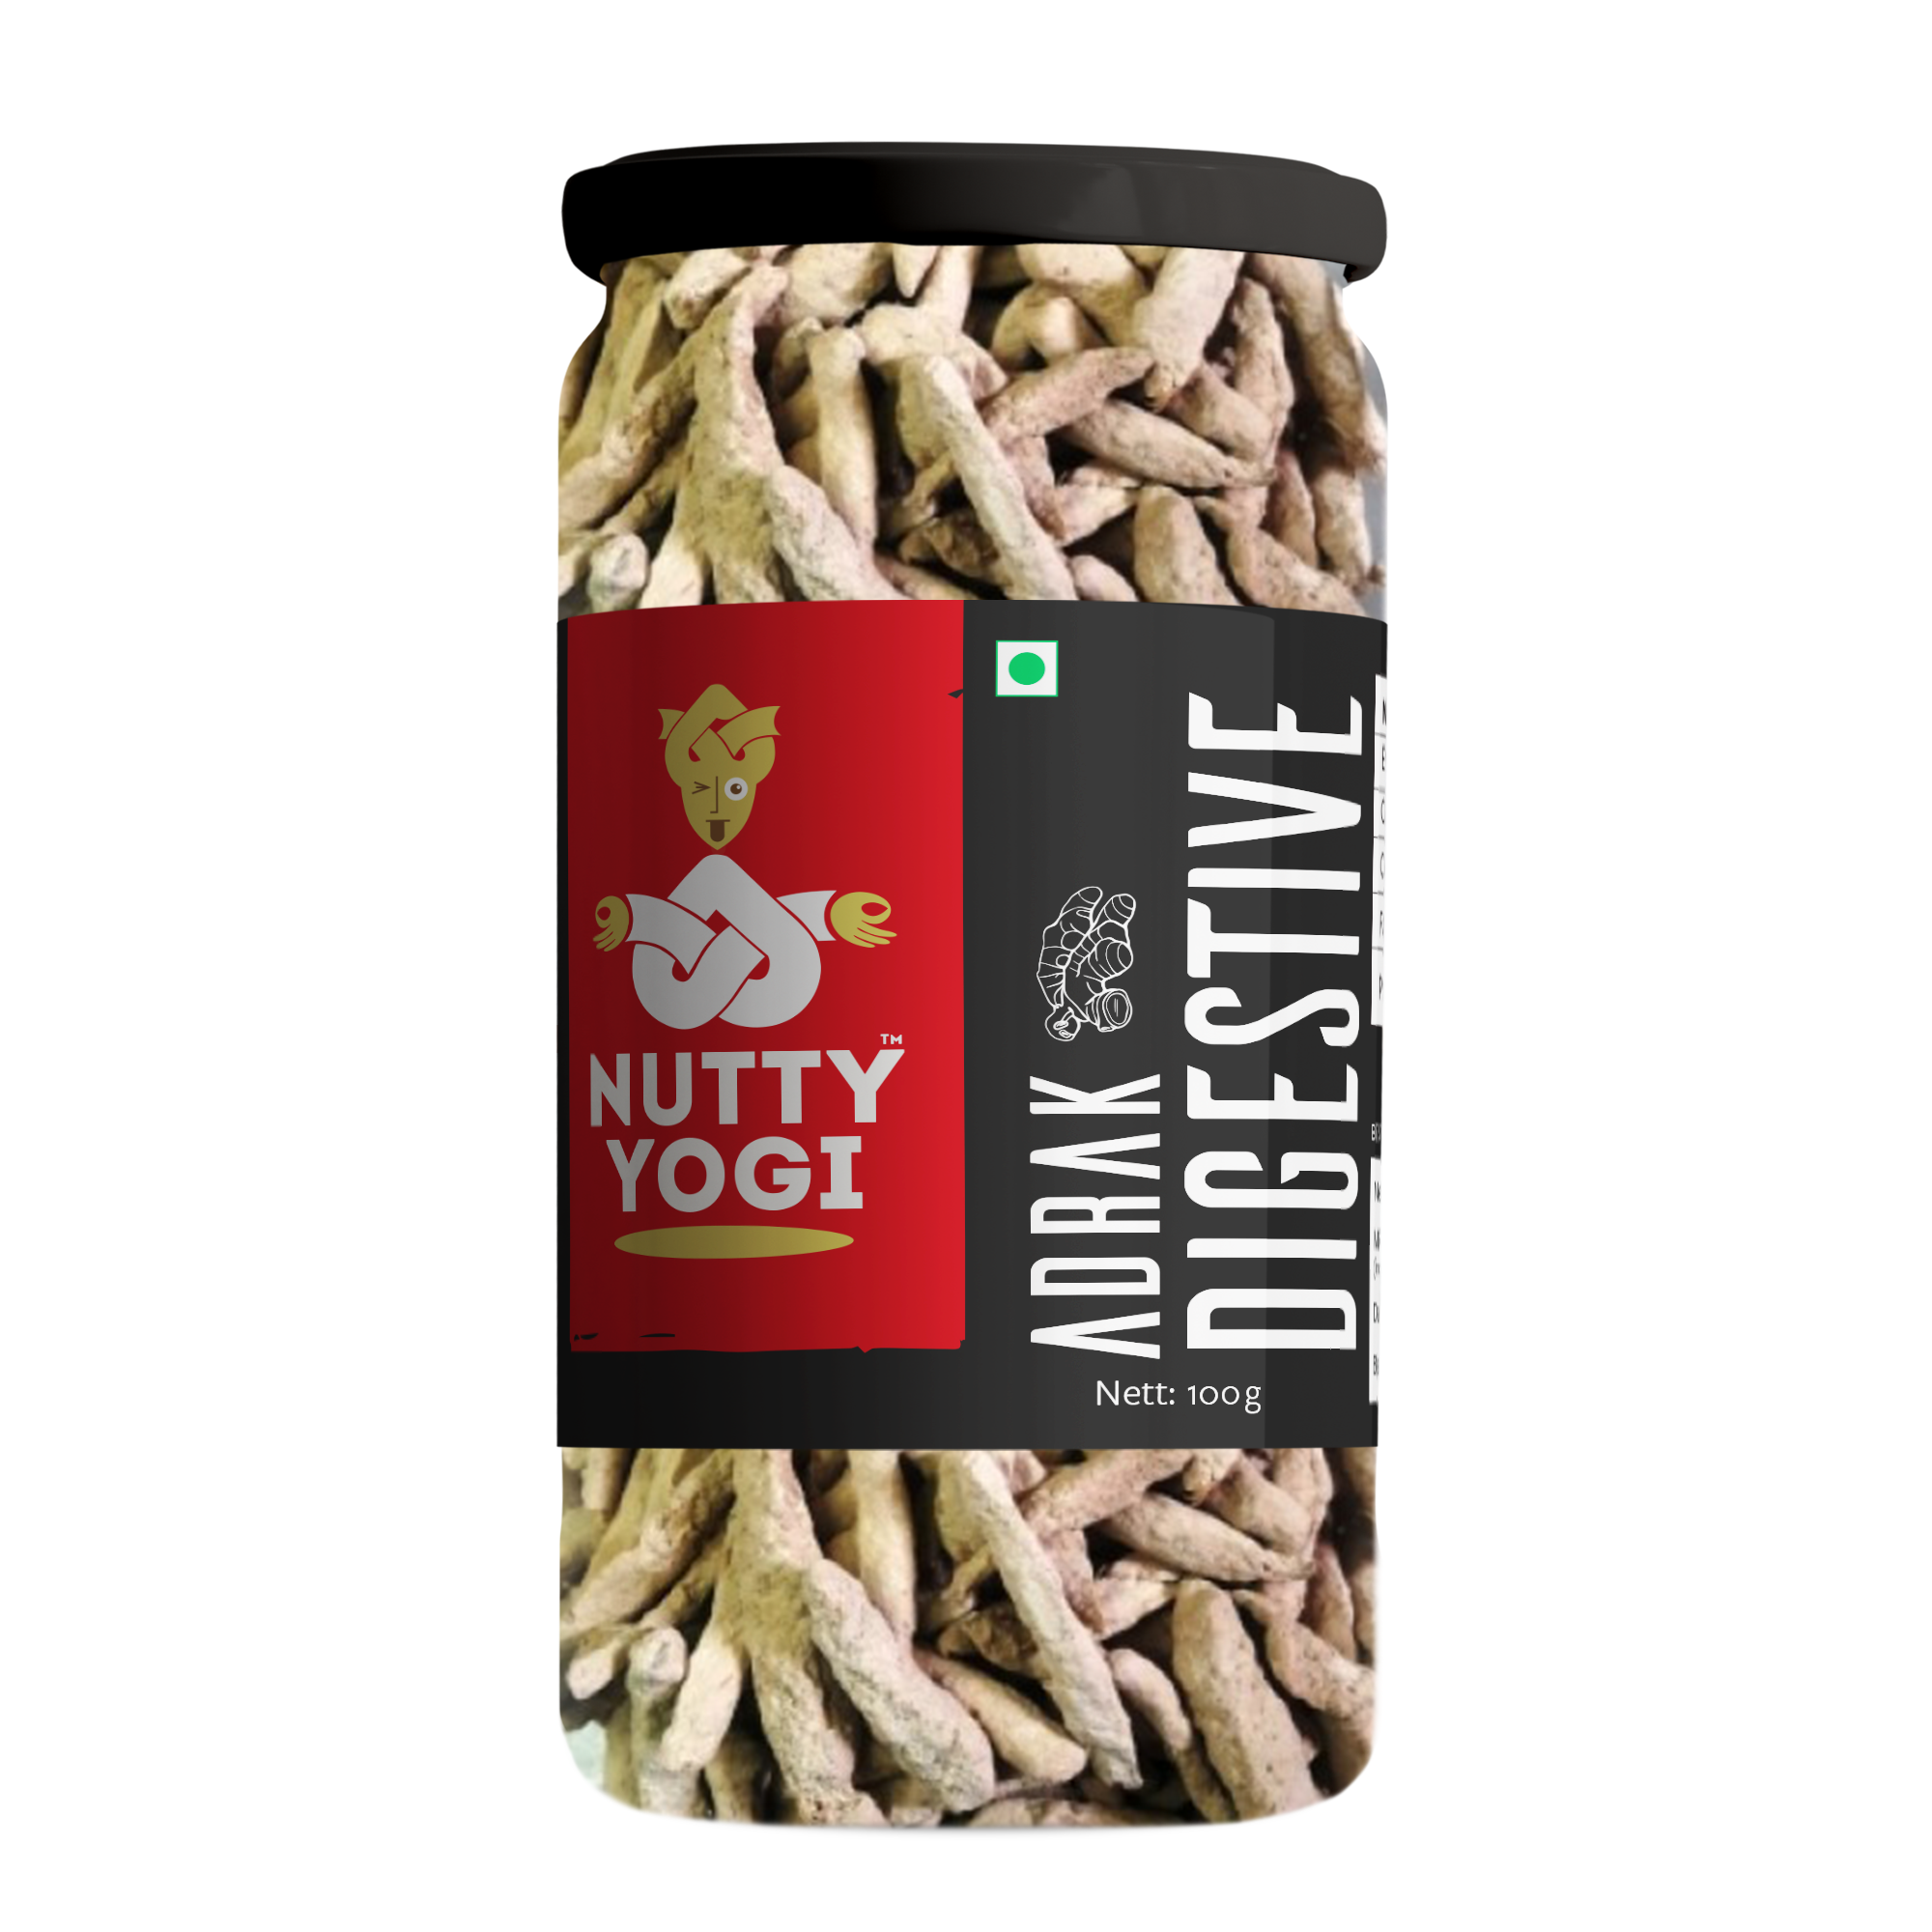 Nutty Yogi Adrak Digestive 100g